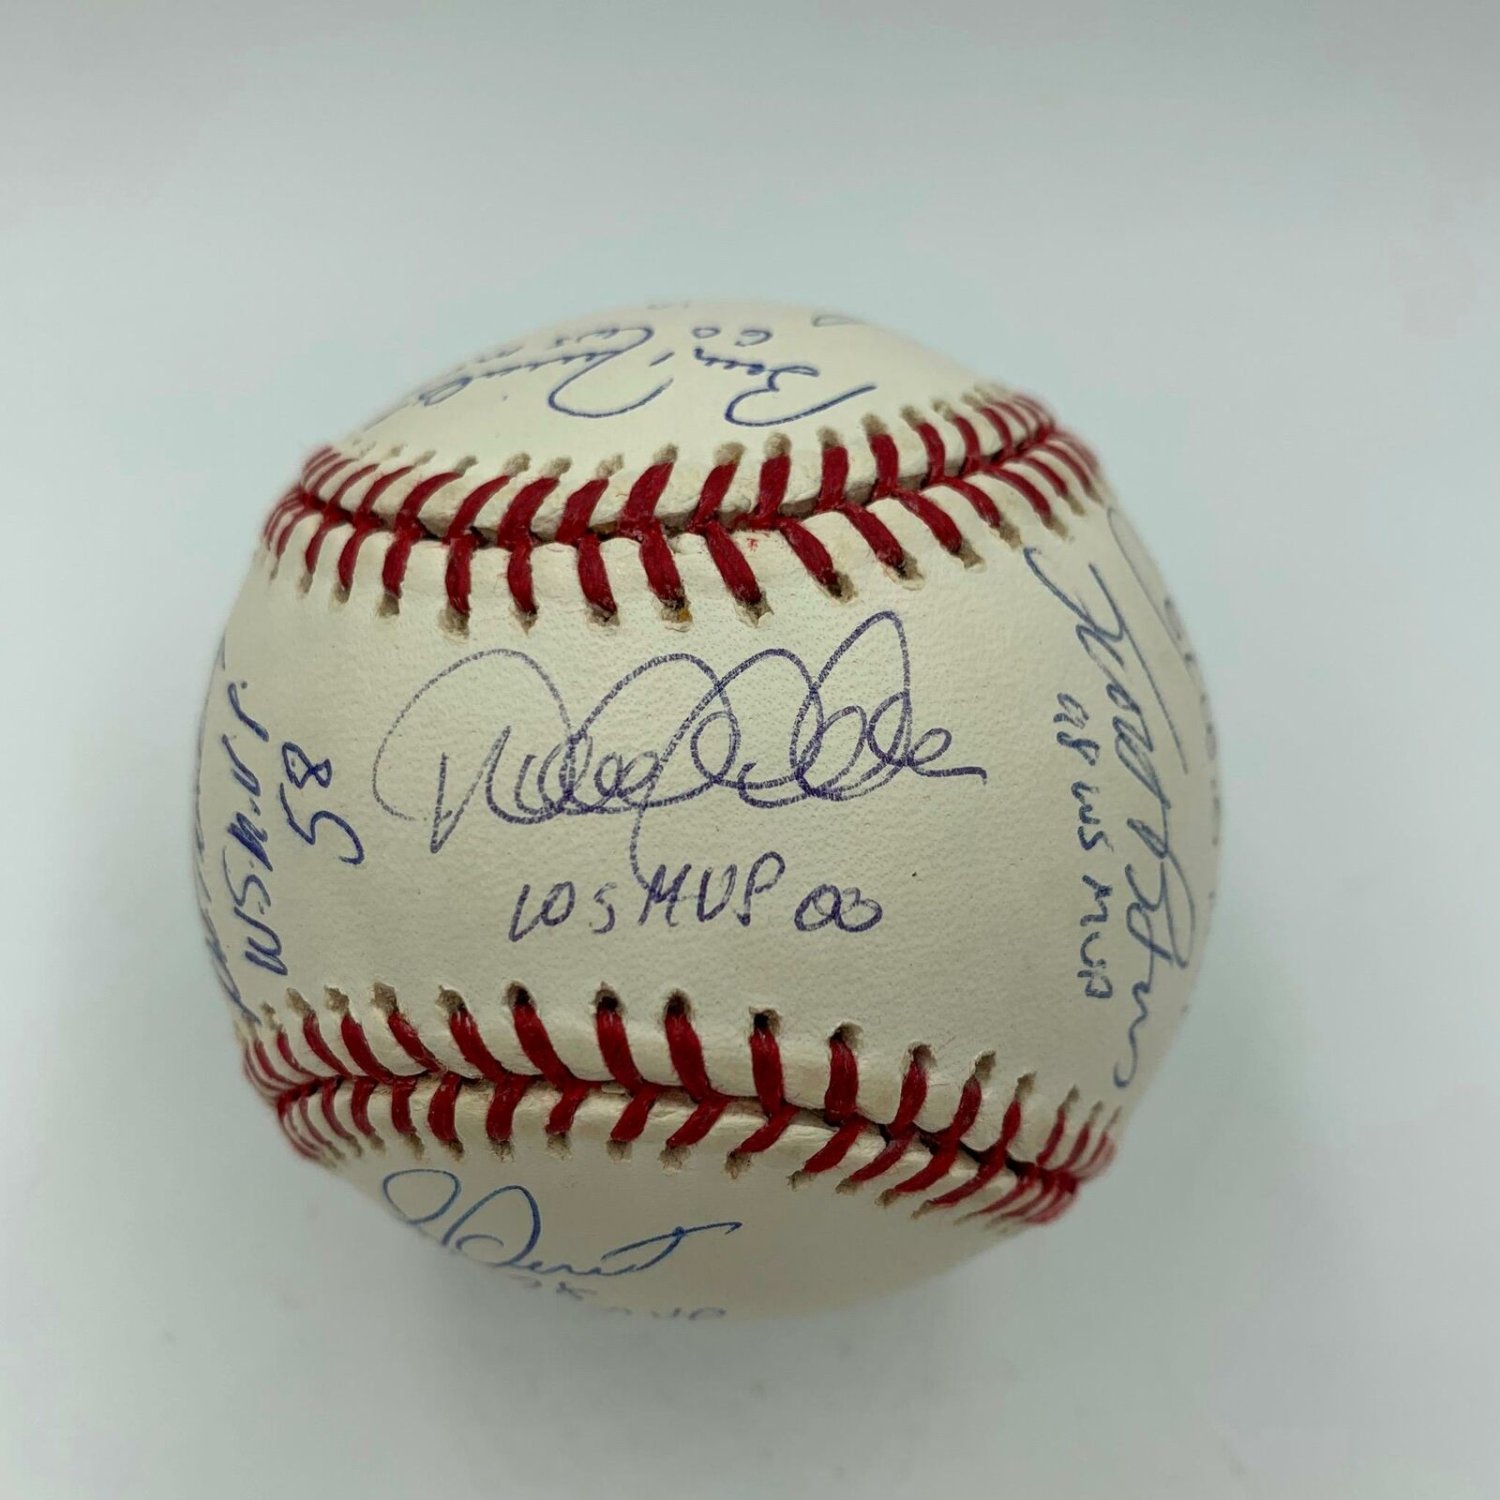 Derek Jeter Autographed Signed & Mariano Rivera Yankees World